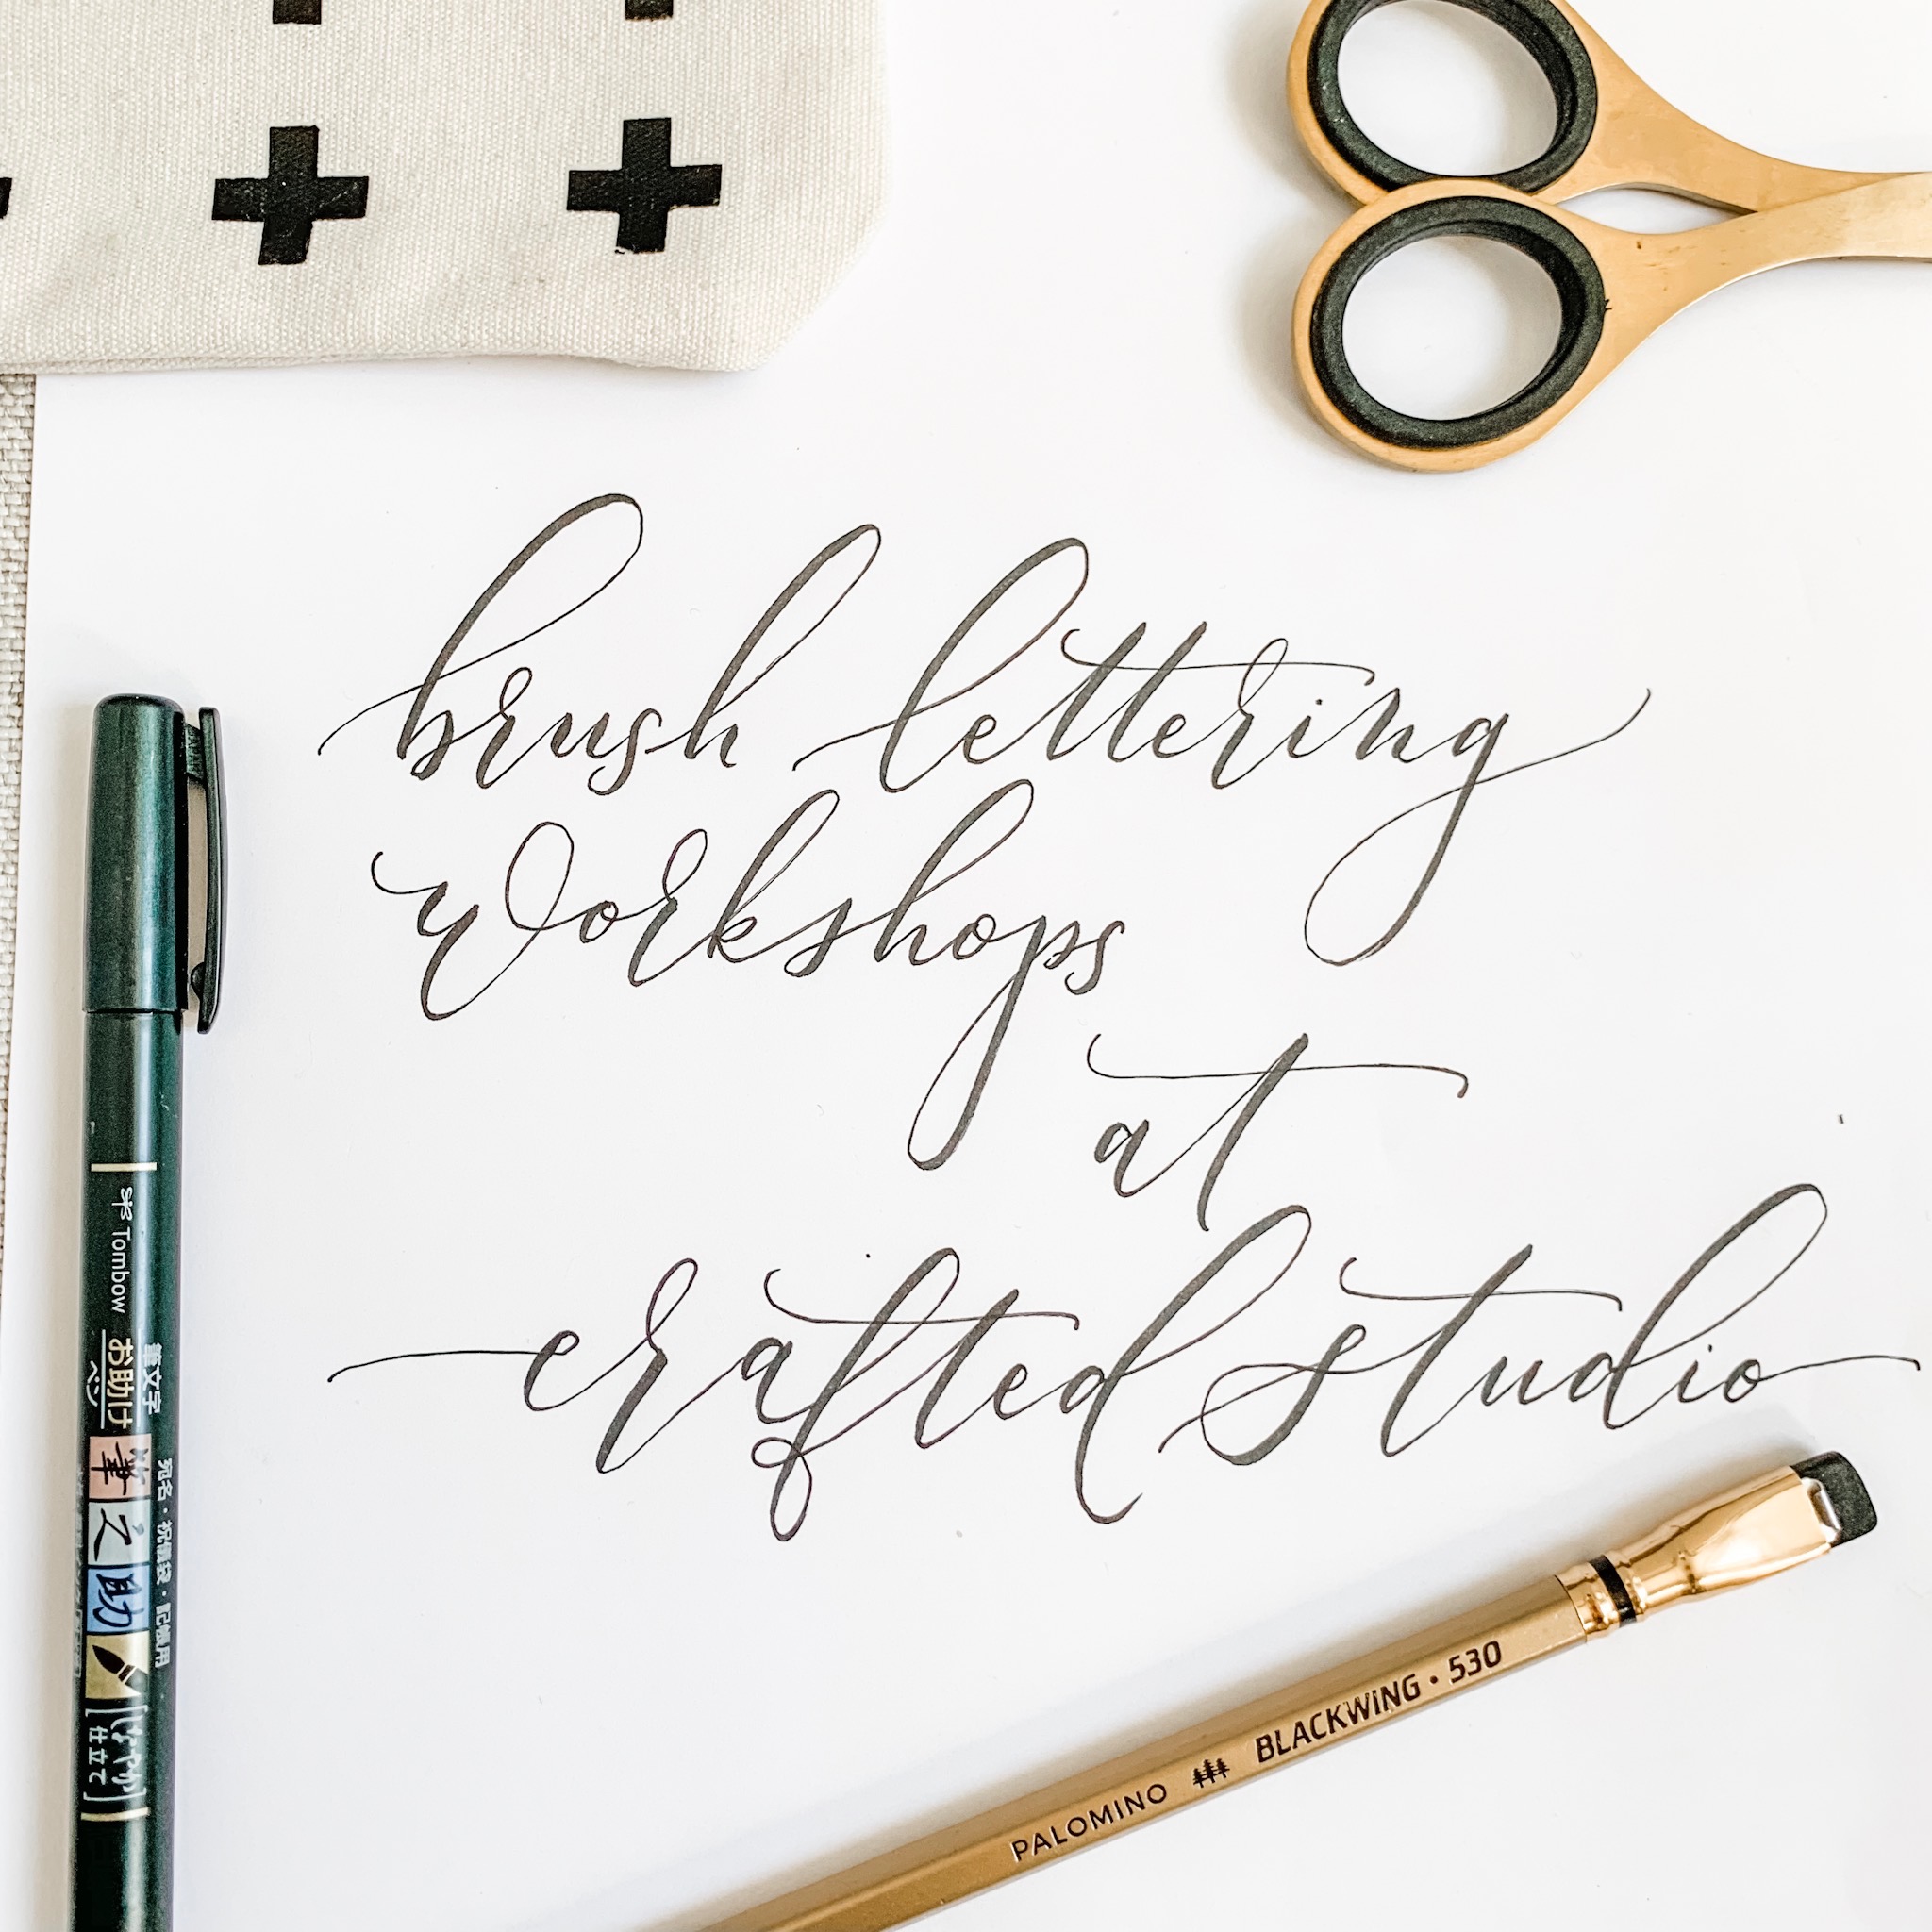 Brush Pen Calligraphy Workshop — Creative Parties Ltd.